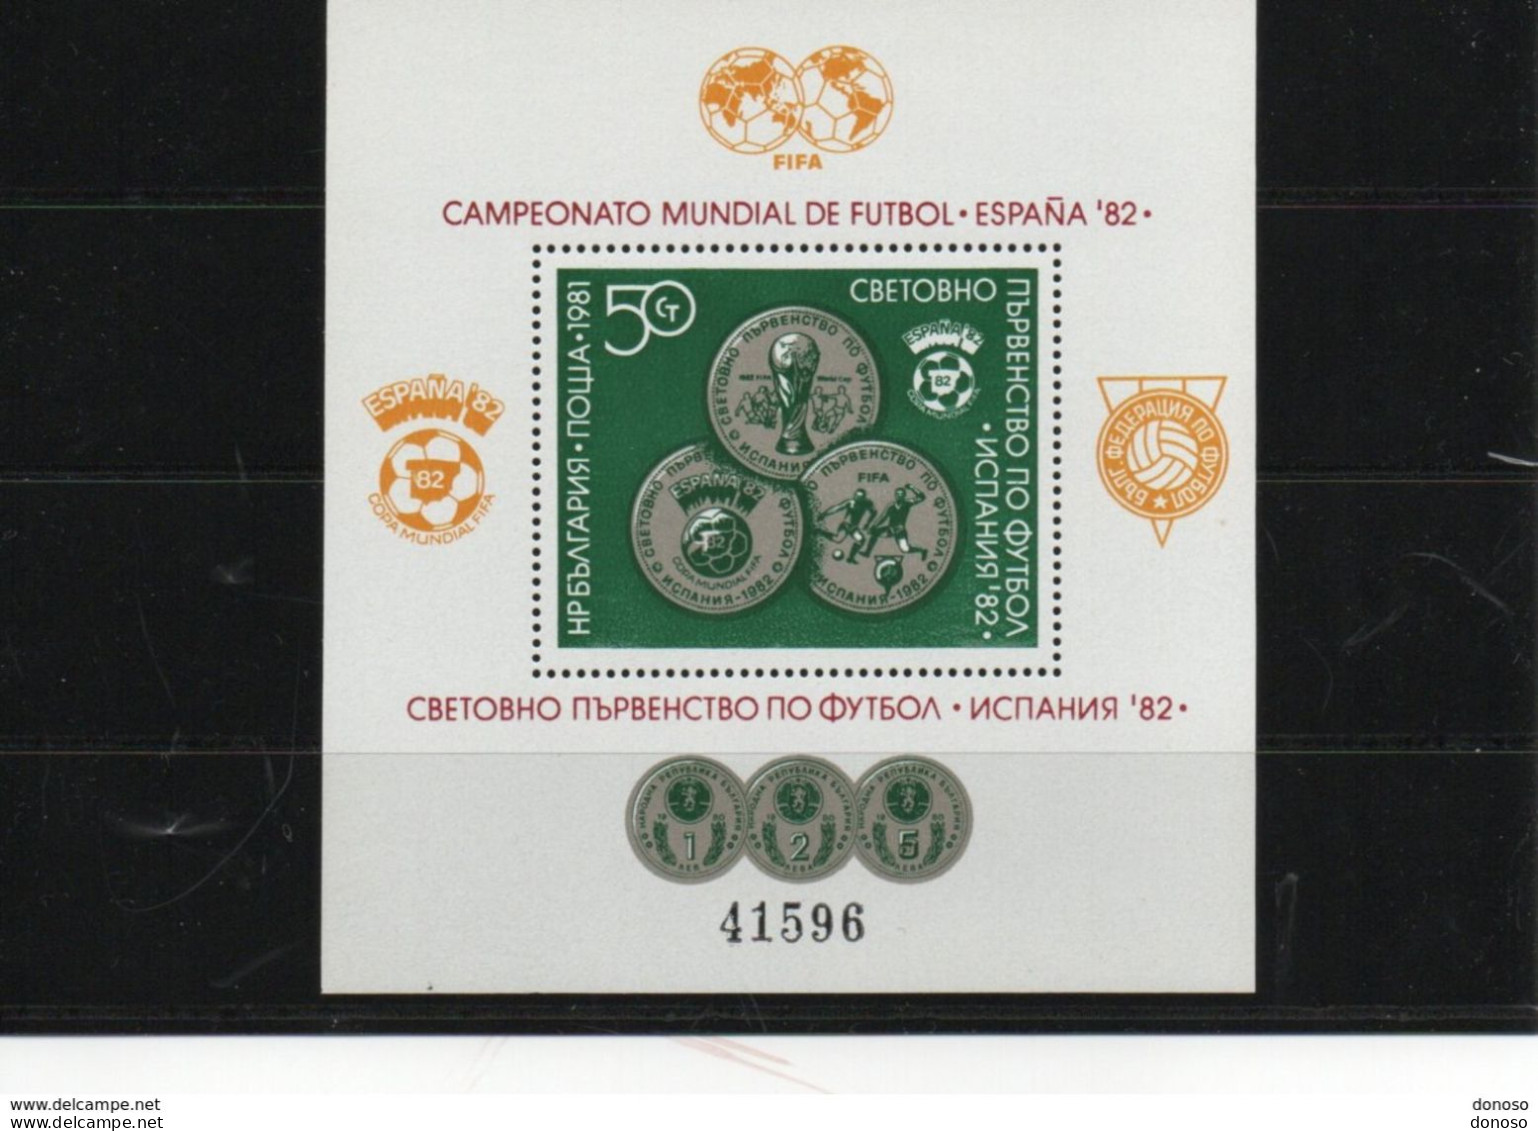 BULGARIE 1981 Coupe Du Monde De Football, Monnaies Yvert BF 98A, Michel Bl 111 NEUF** MNH Cote 40 Euros - Blocks & Sheetlets